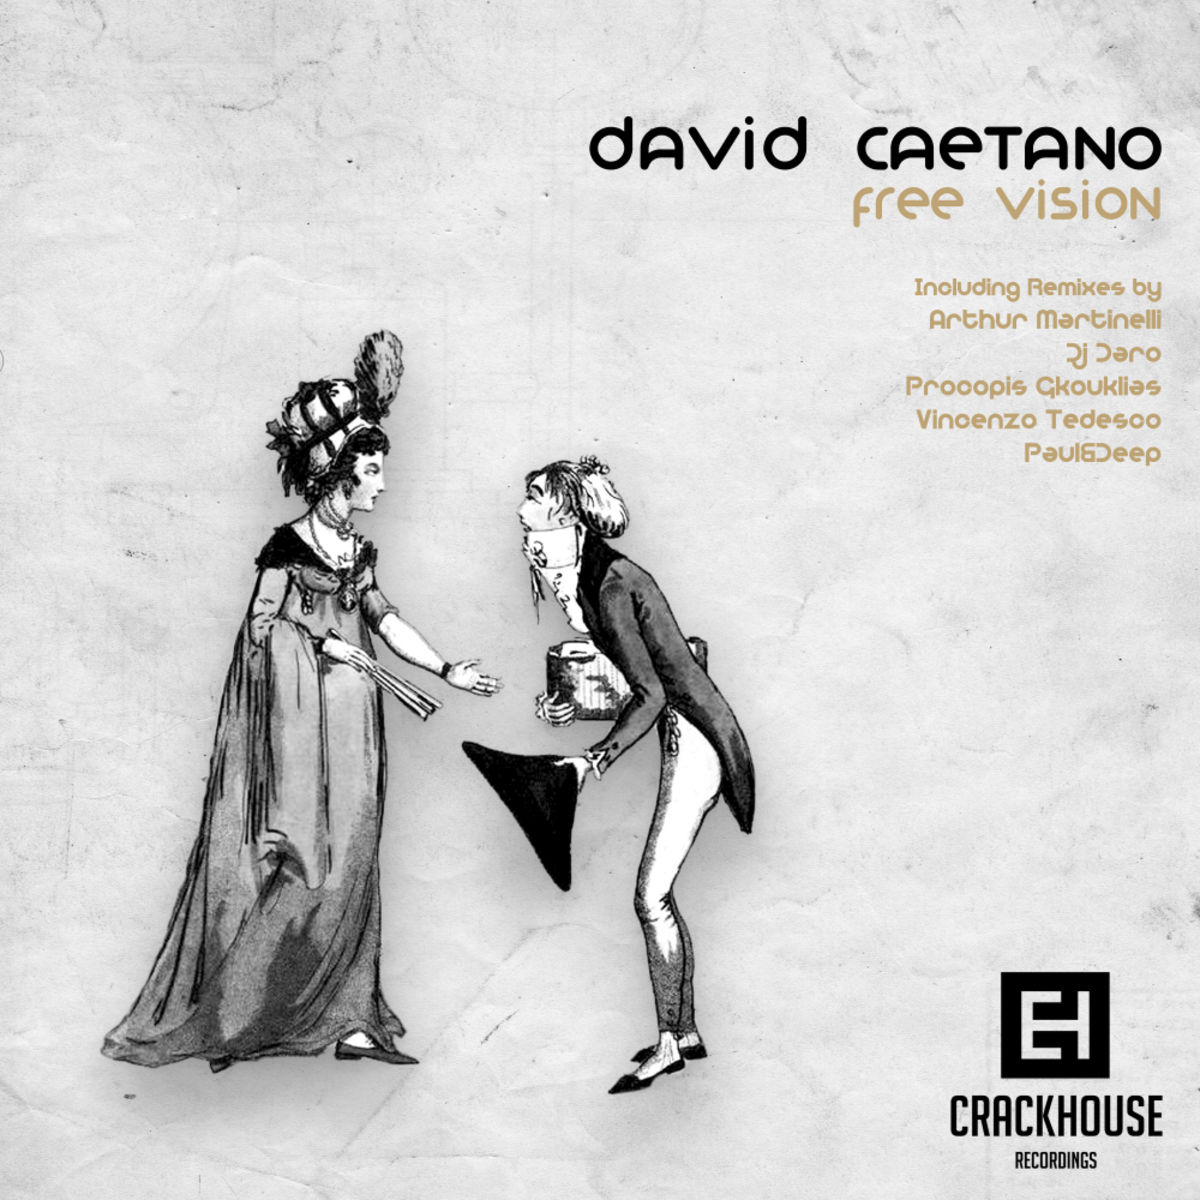 David Caetano - Free Vision / CrackHouse Recordings